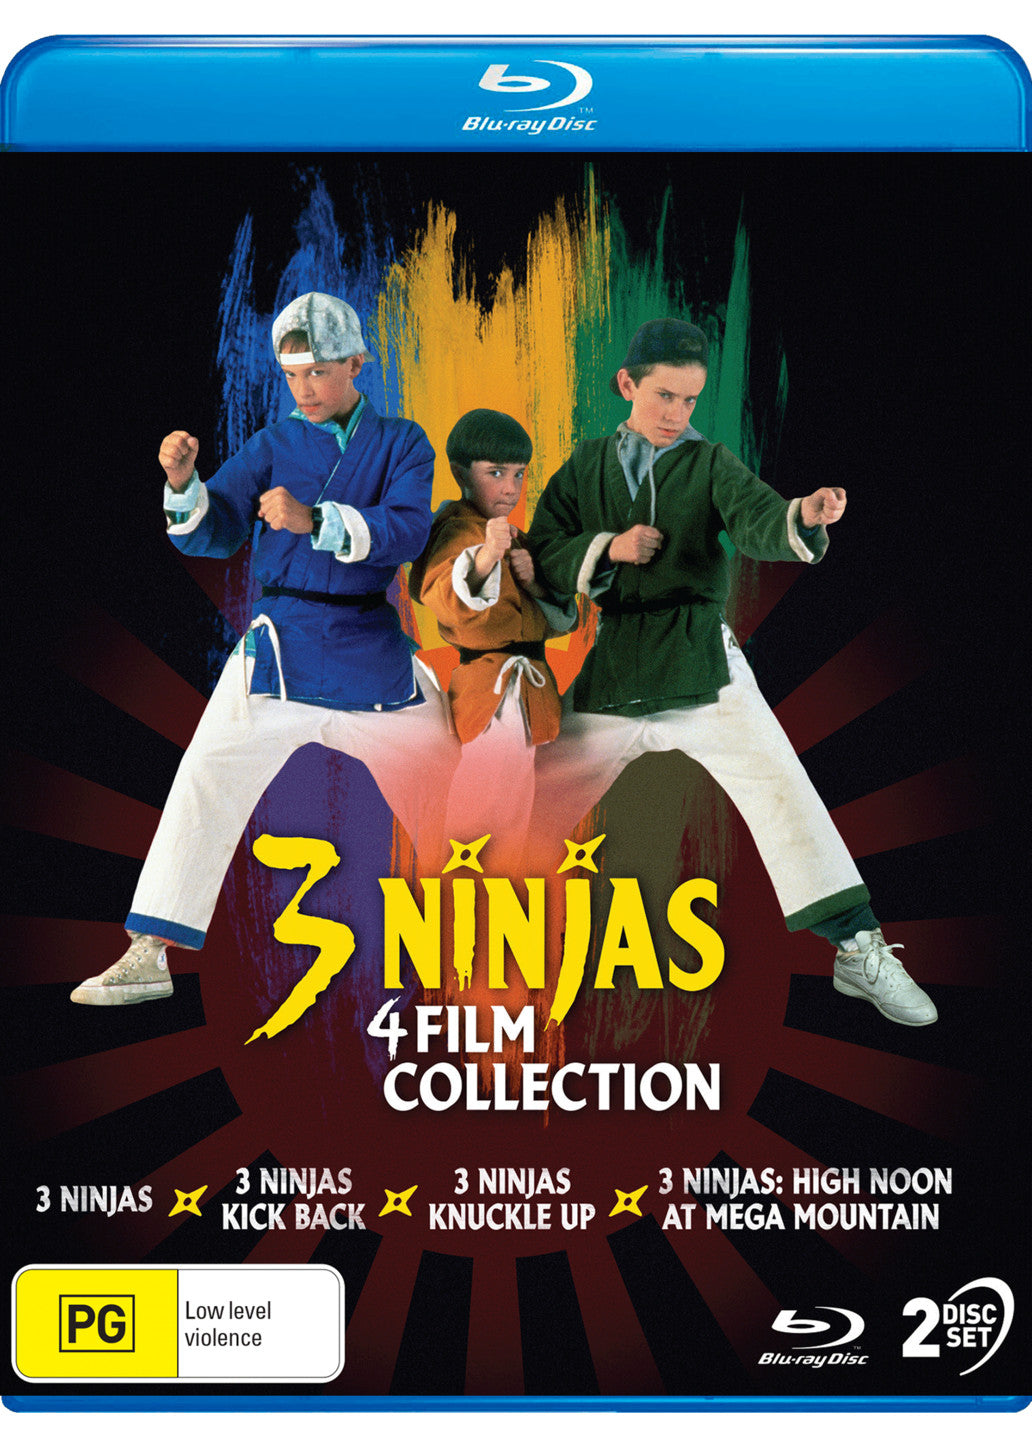 3 NINJAS: 4 FILM COLLECTION (3 NINJAS / 3 NINJAS KICK BACK / 3 NINJAS KNUCKLE UP / 3 NINJAS: HIGH NOON AT MEGA MOUNTAIN) - BLU-RAY